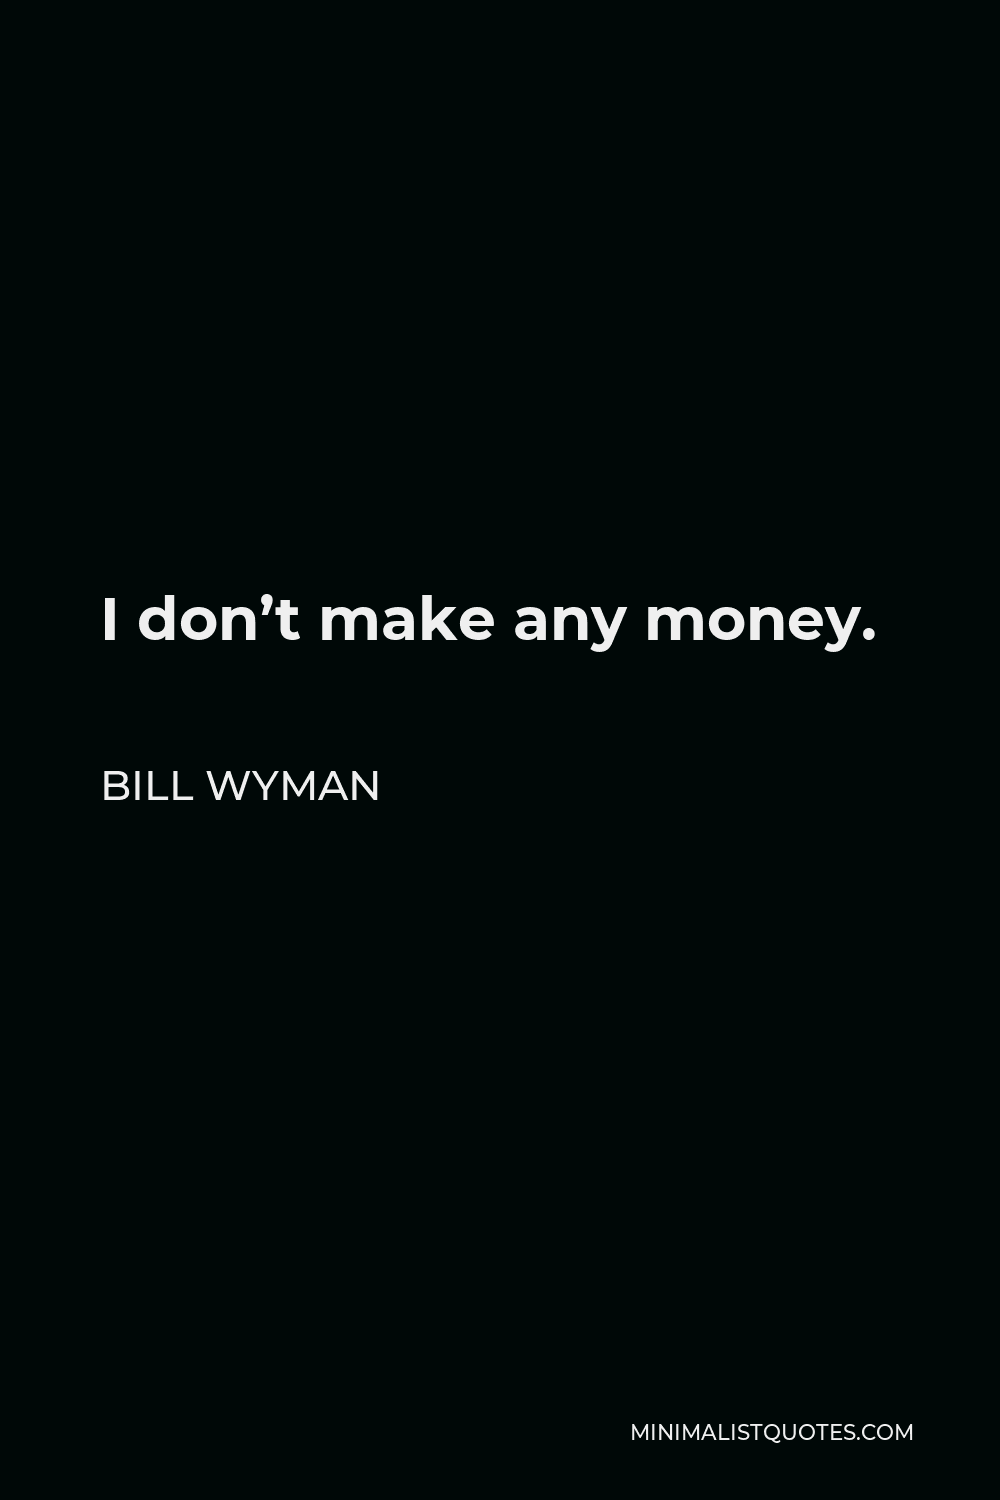 Bill Wyman Quote - I don’t make any money.